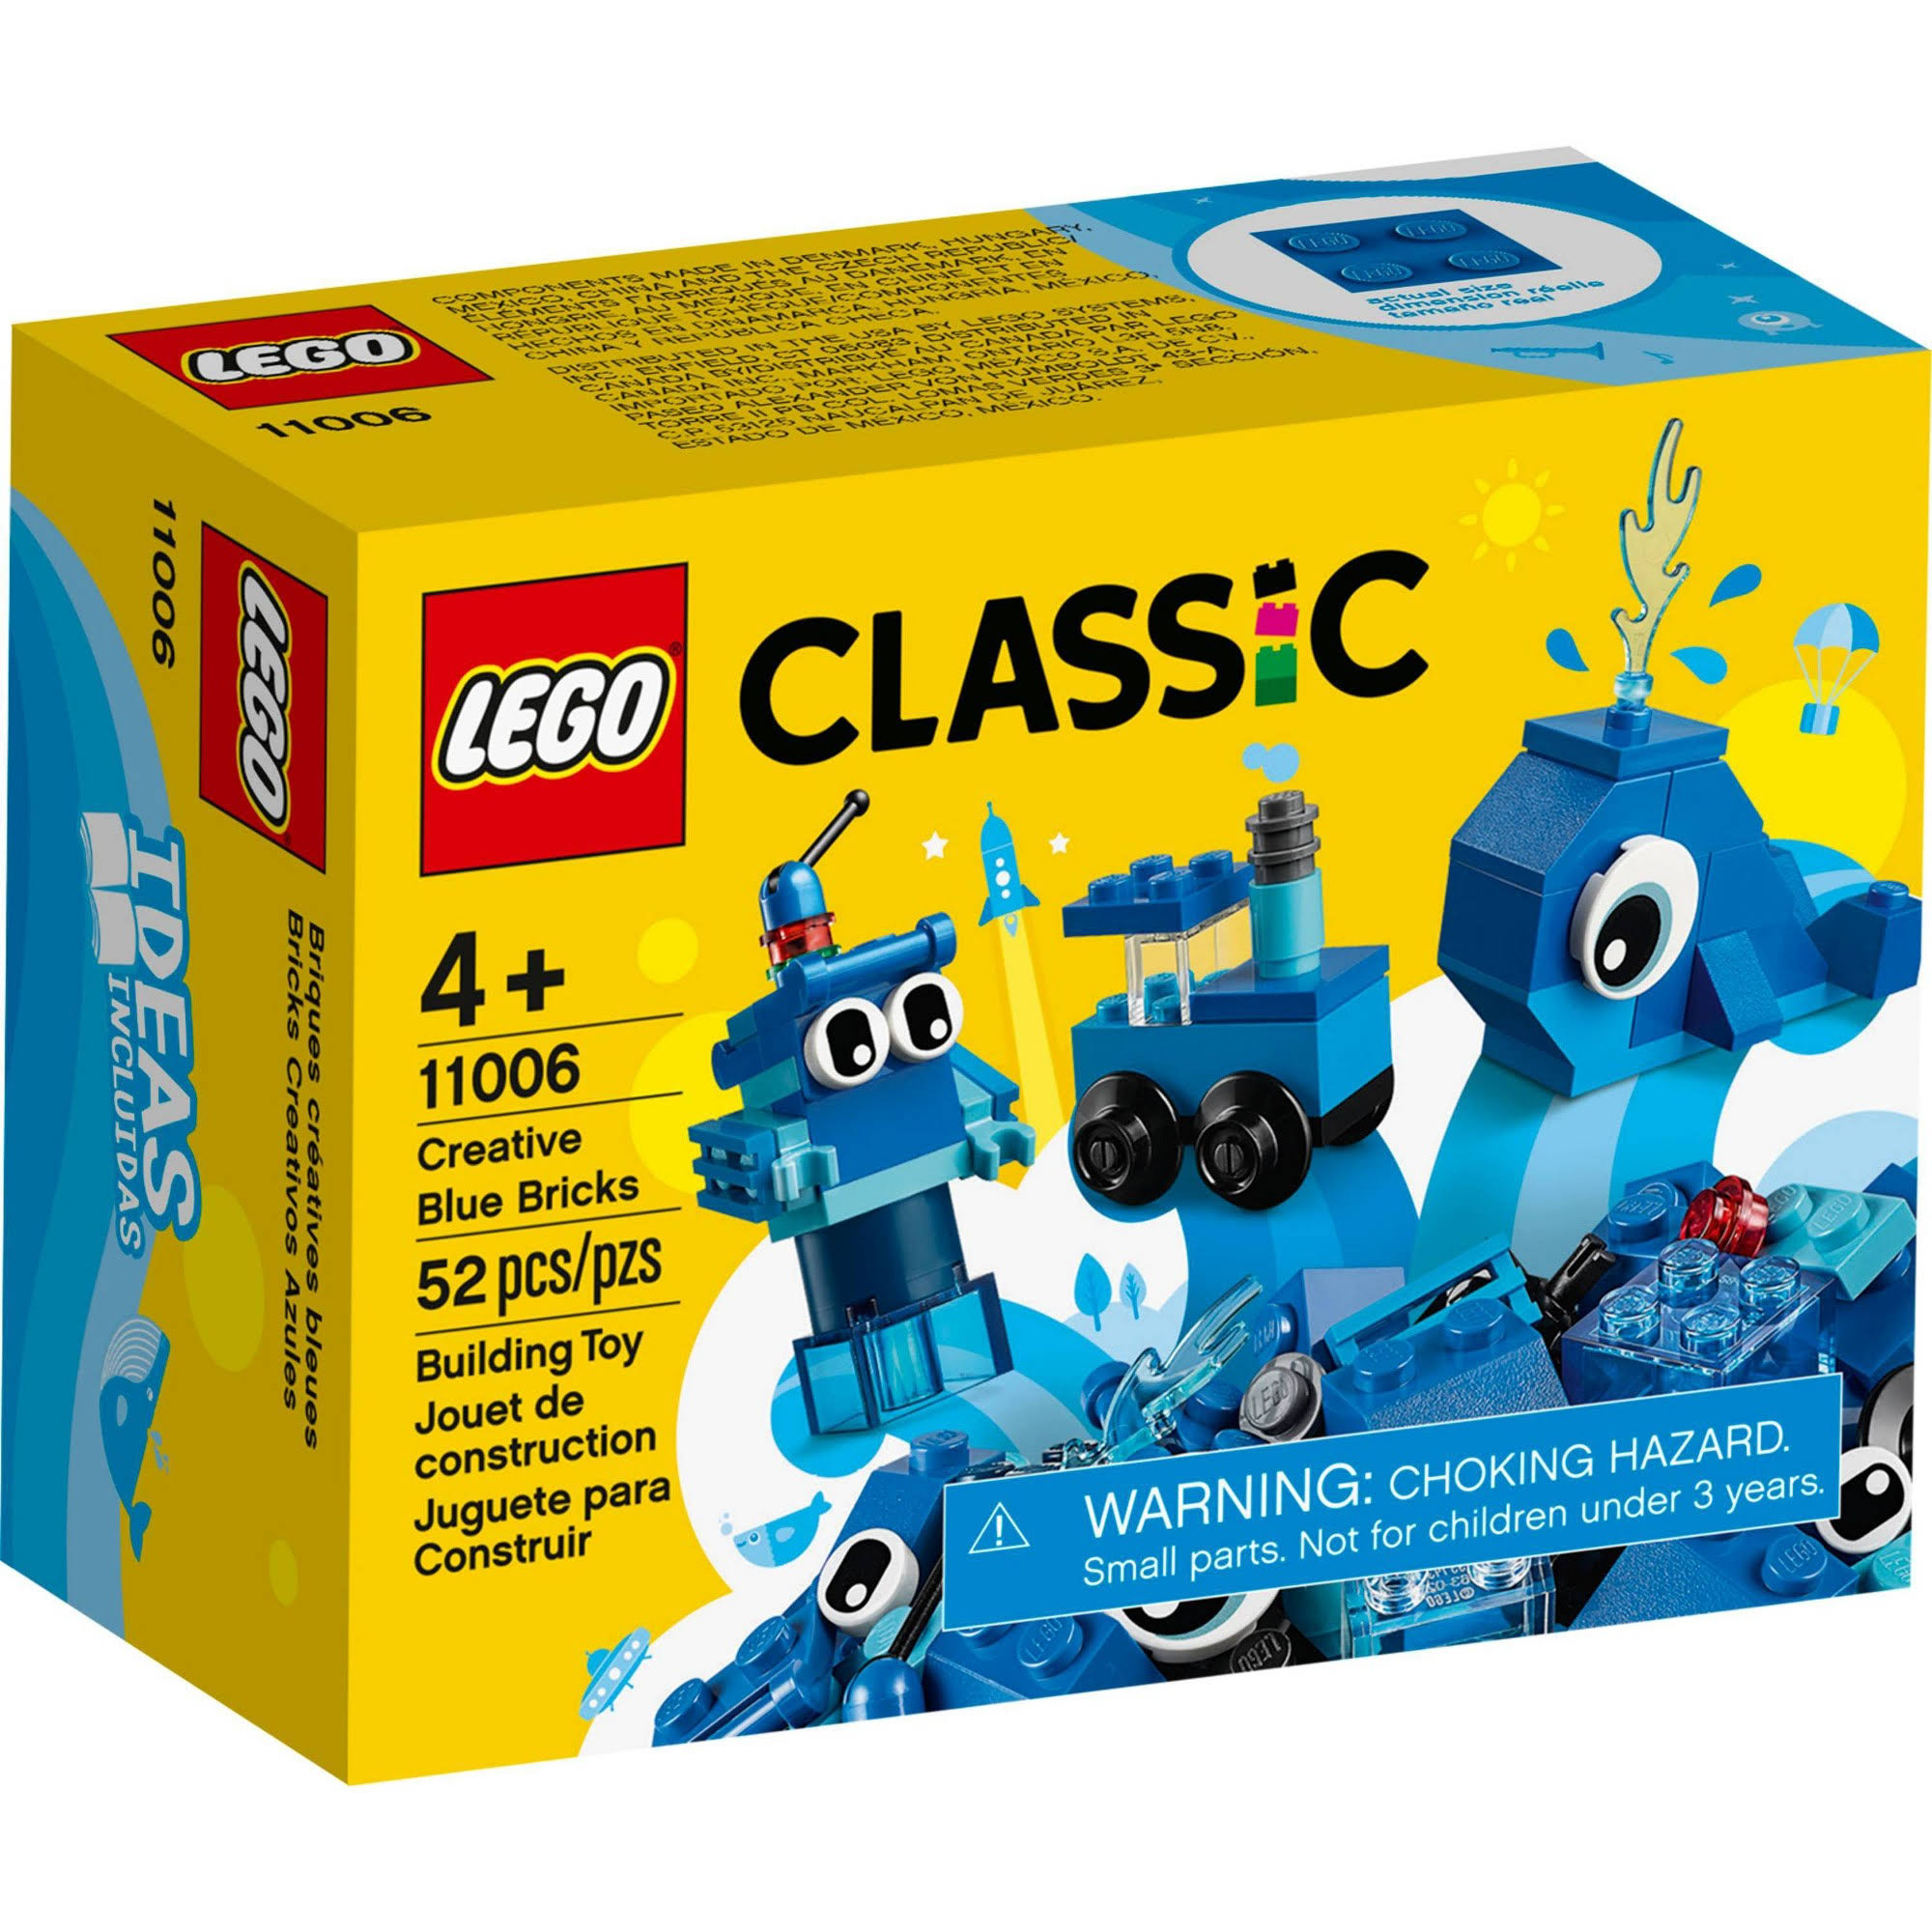 LEGO Classic Creative Blue Bricks 11006 Kids Building Toy Starter Set